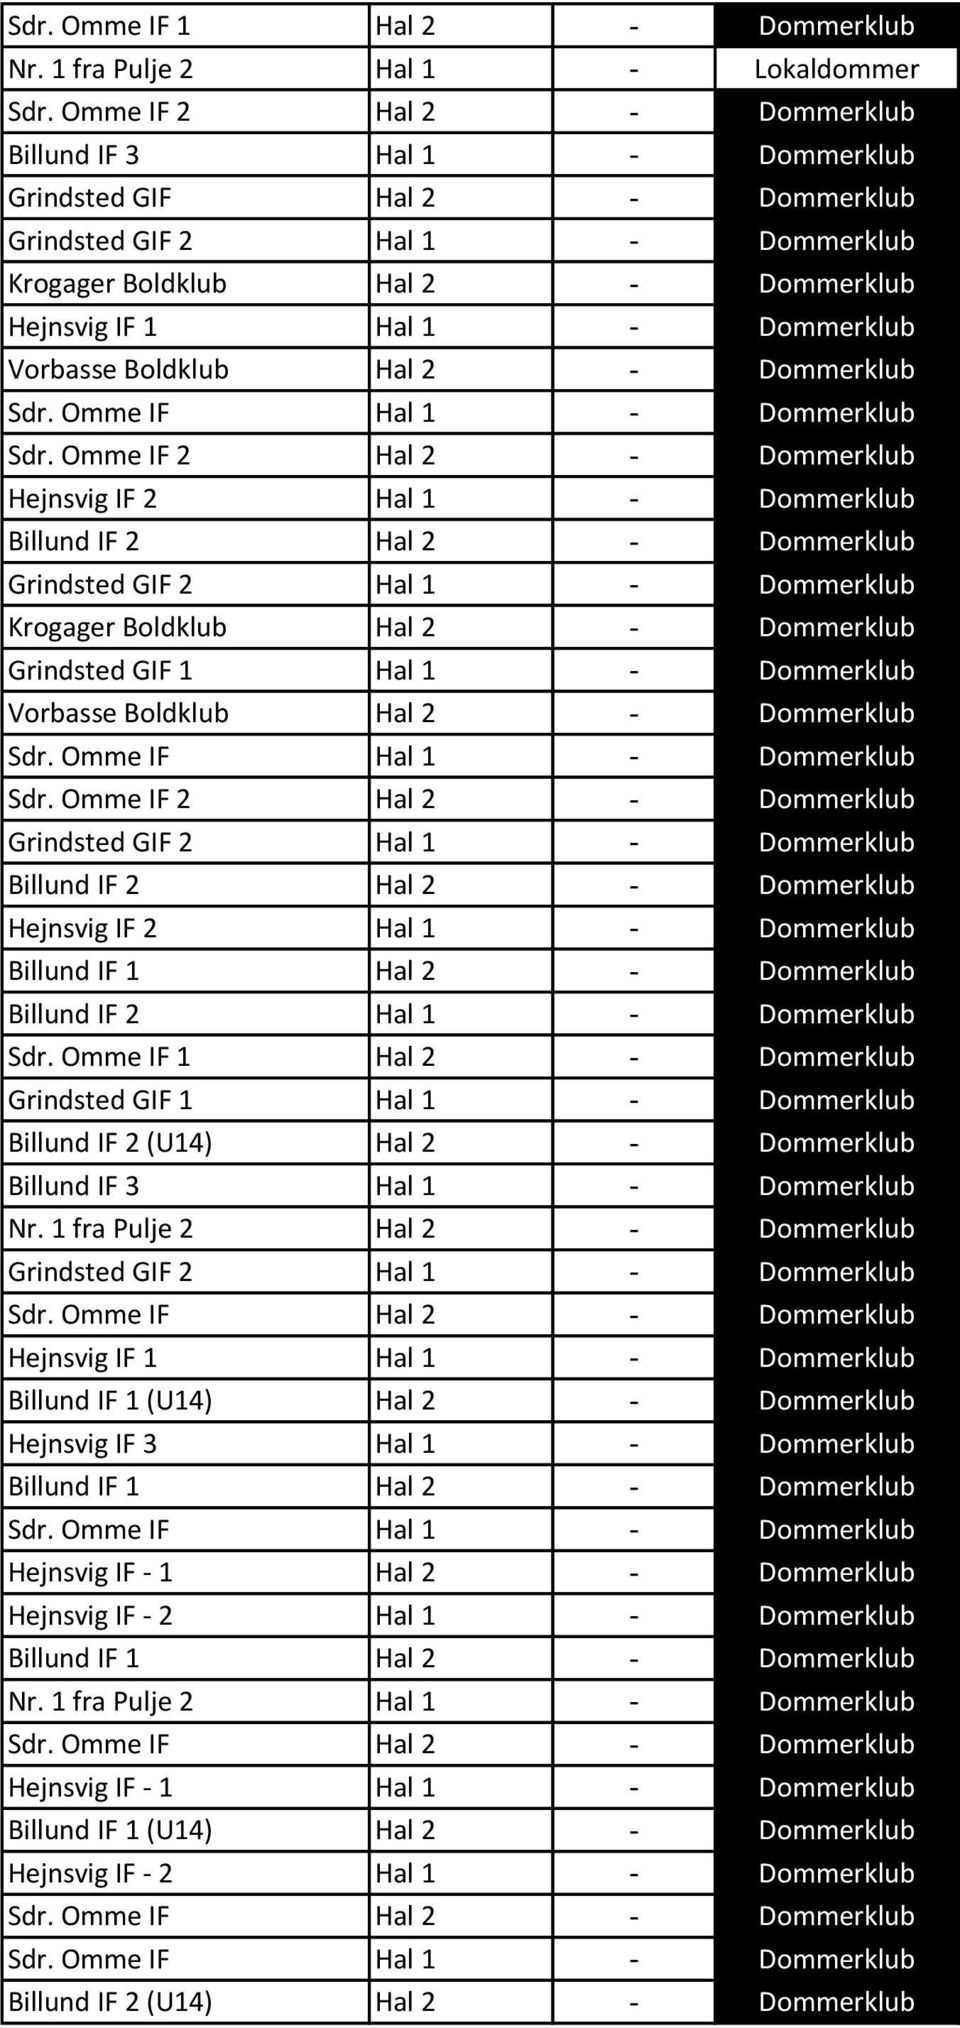 Vorbasse Boldklub Hal 2 - Dommerklub Sdr.